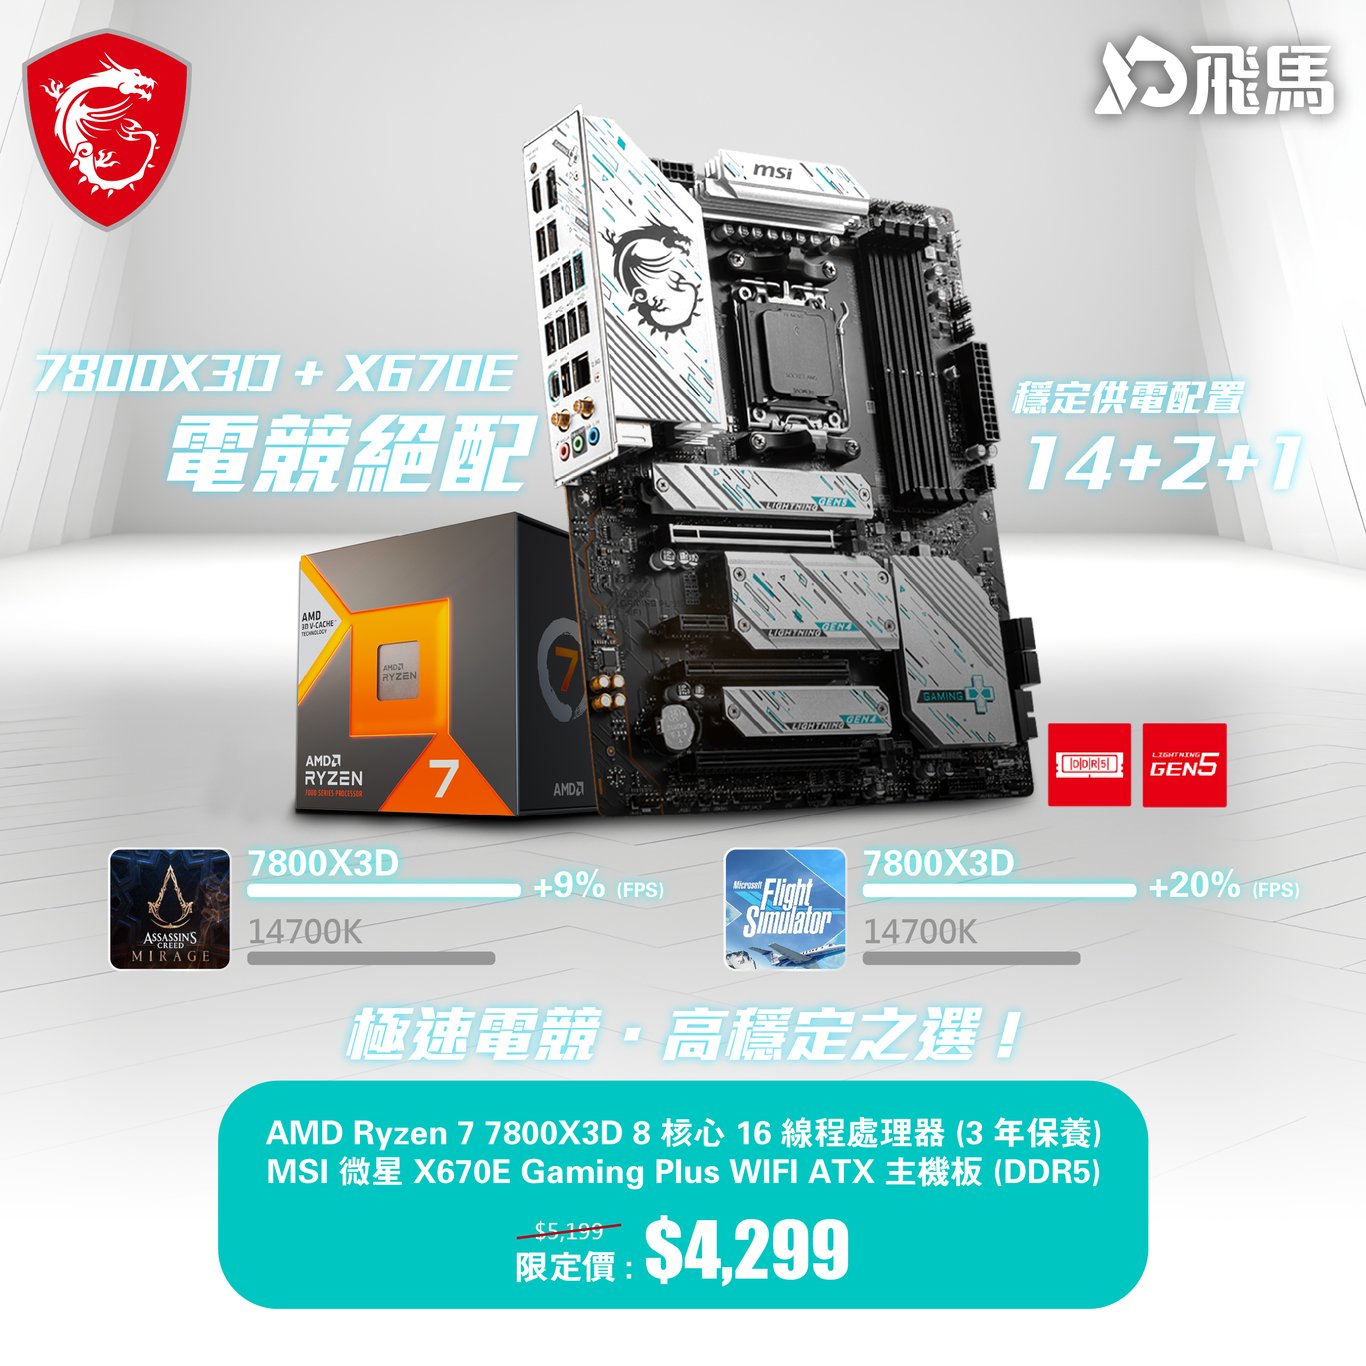 MSI AMD 7800X3D + X670E 